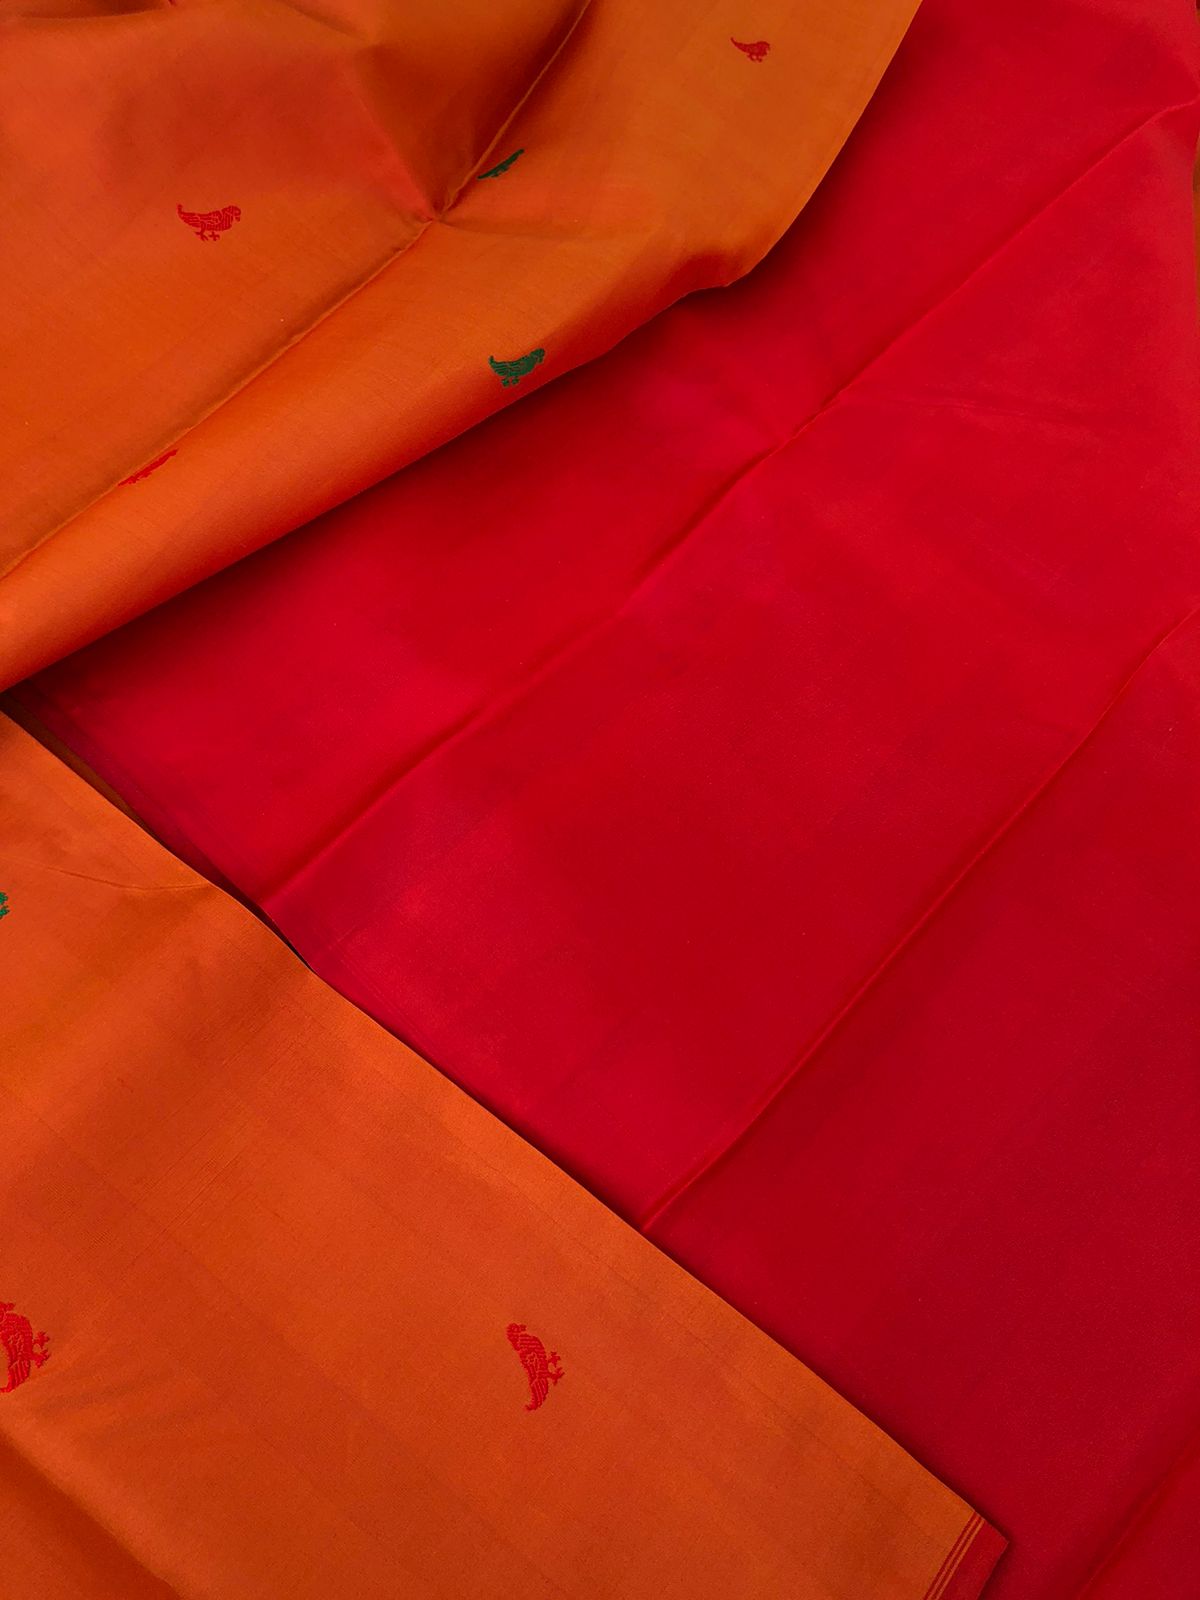 Woven from Memories - No Zari Kanchivarams - stunning rusty orange with parrots woven buttas